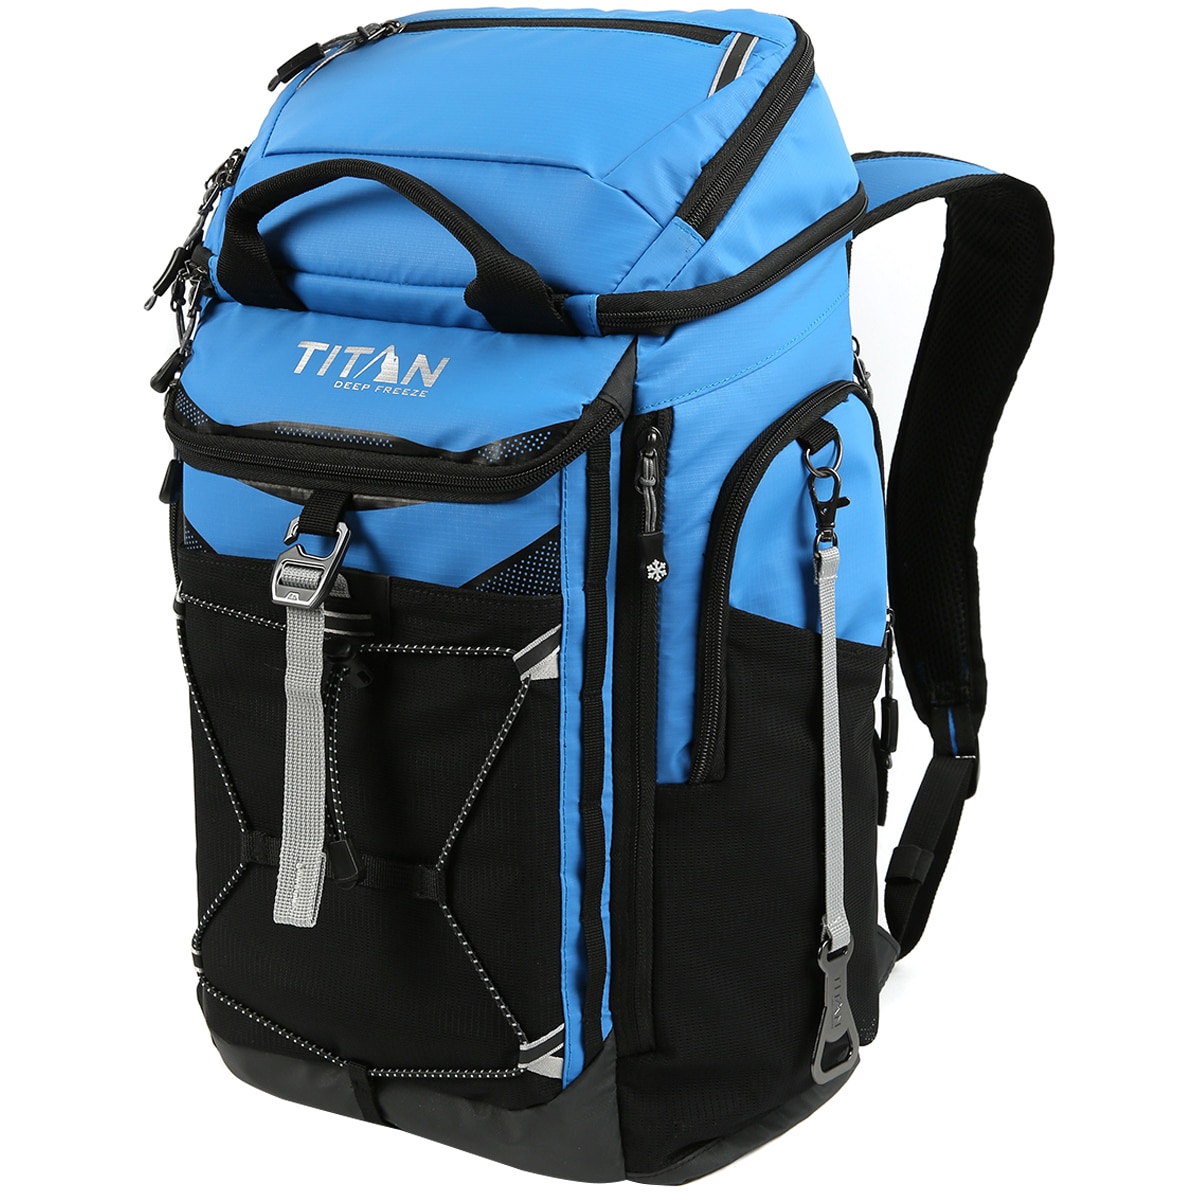 Titan 26 Can Backpack Cooler - Blue